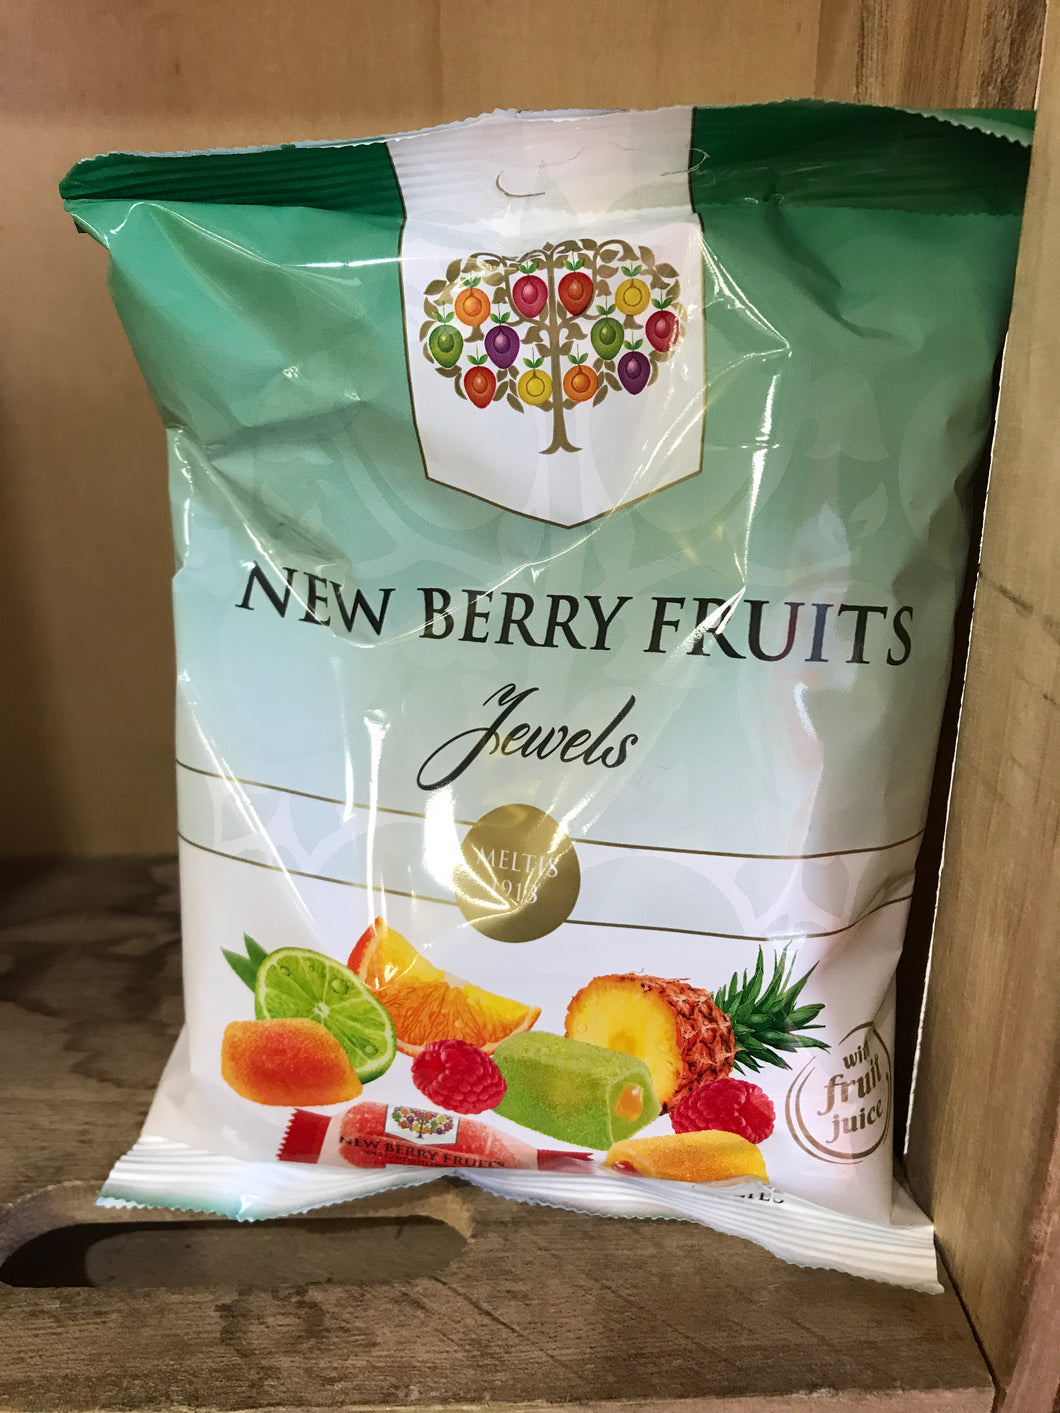 Meltis New Berry Fruits Jewels 160g